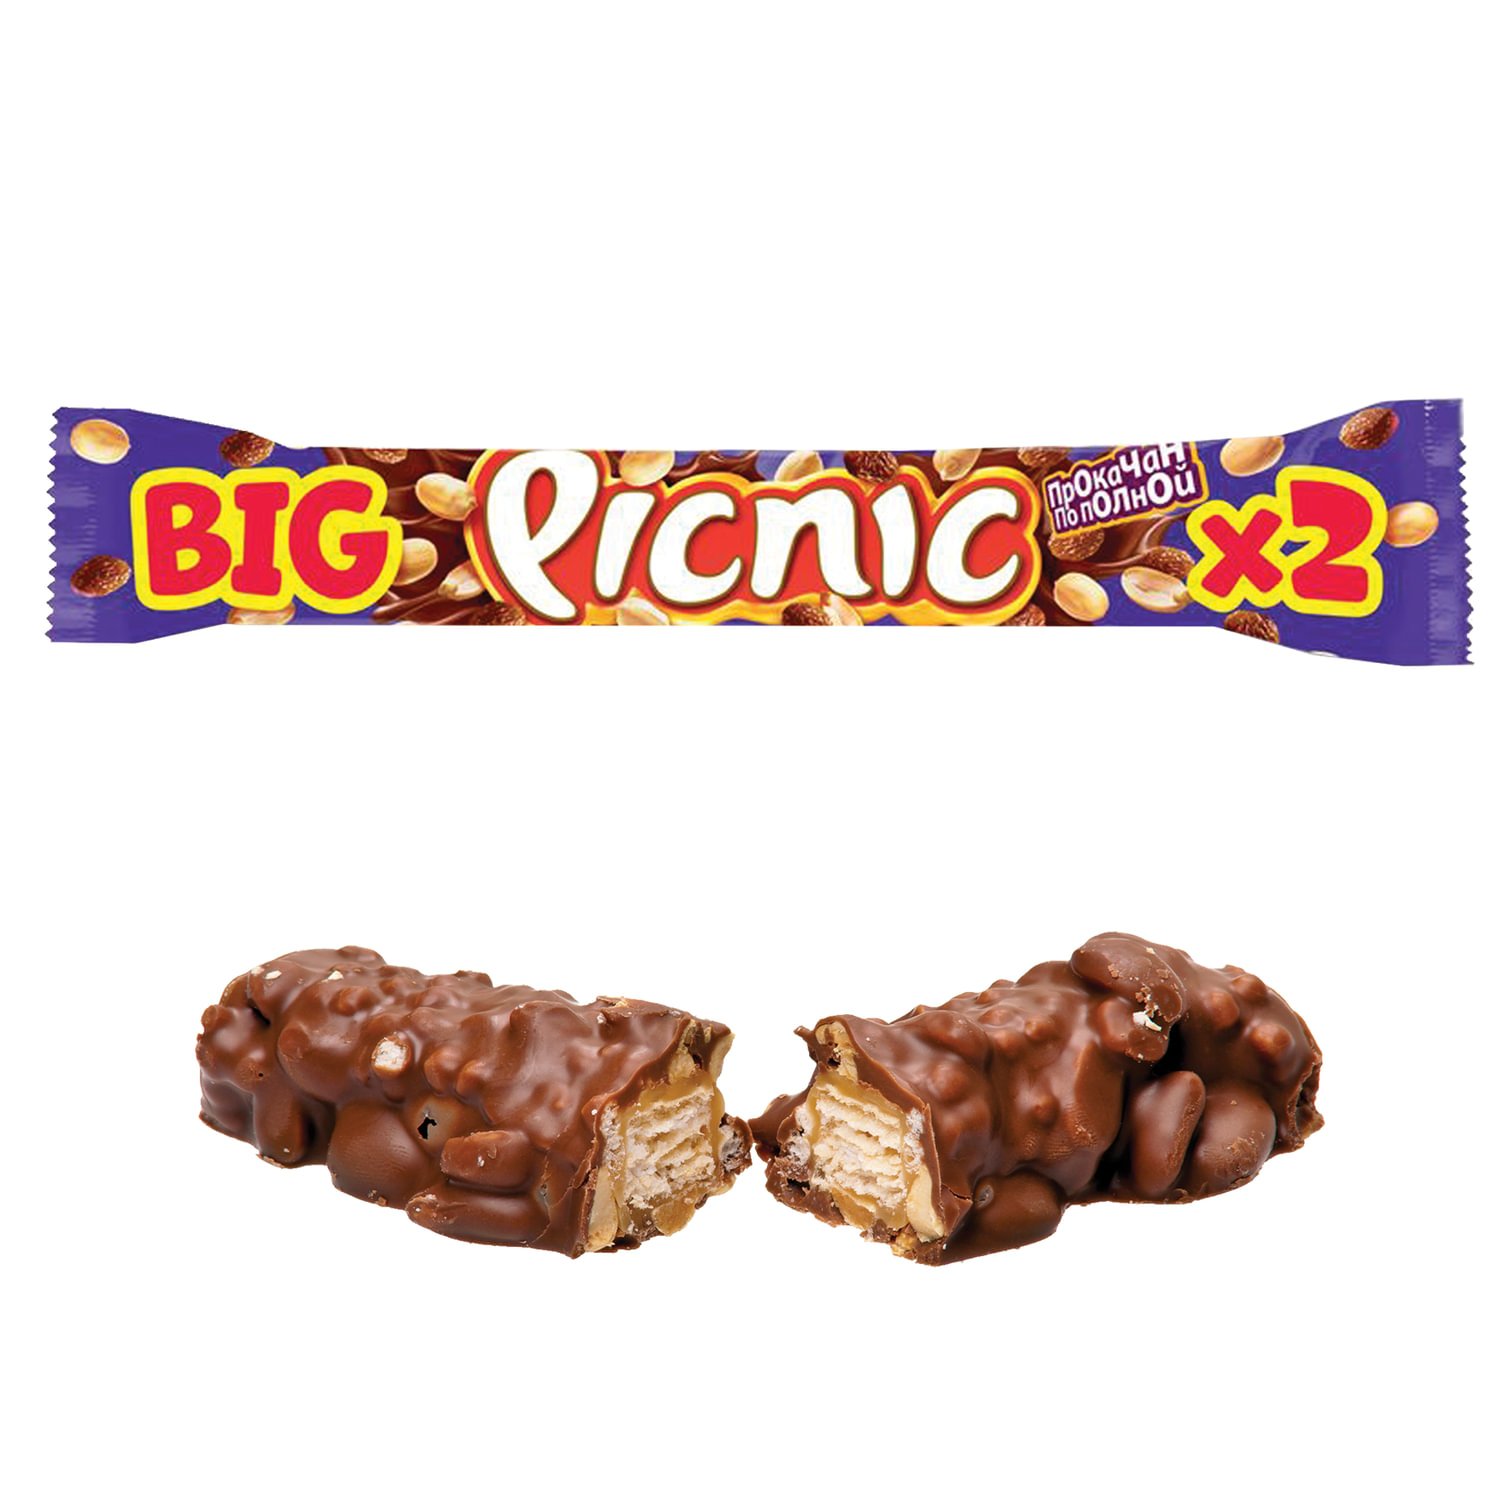 Пикник орех. Батончик пикник big 76г. Батончик шоколадный пикник 38гр. Шоколадный батончик Picnic 38г. Шоколадный батончик пикник Биг 76г.